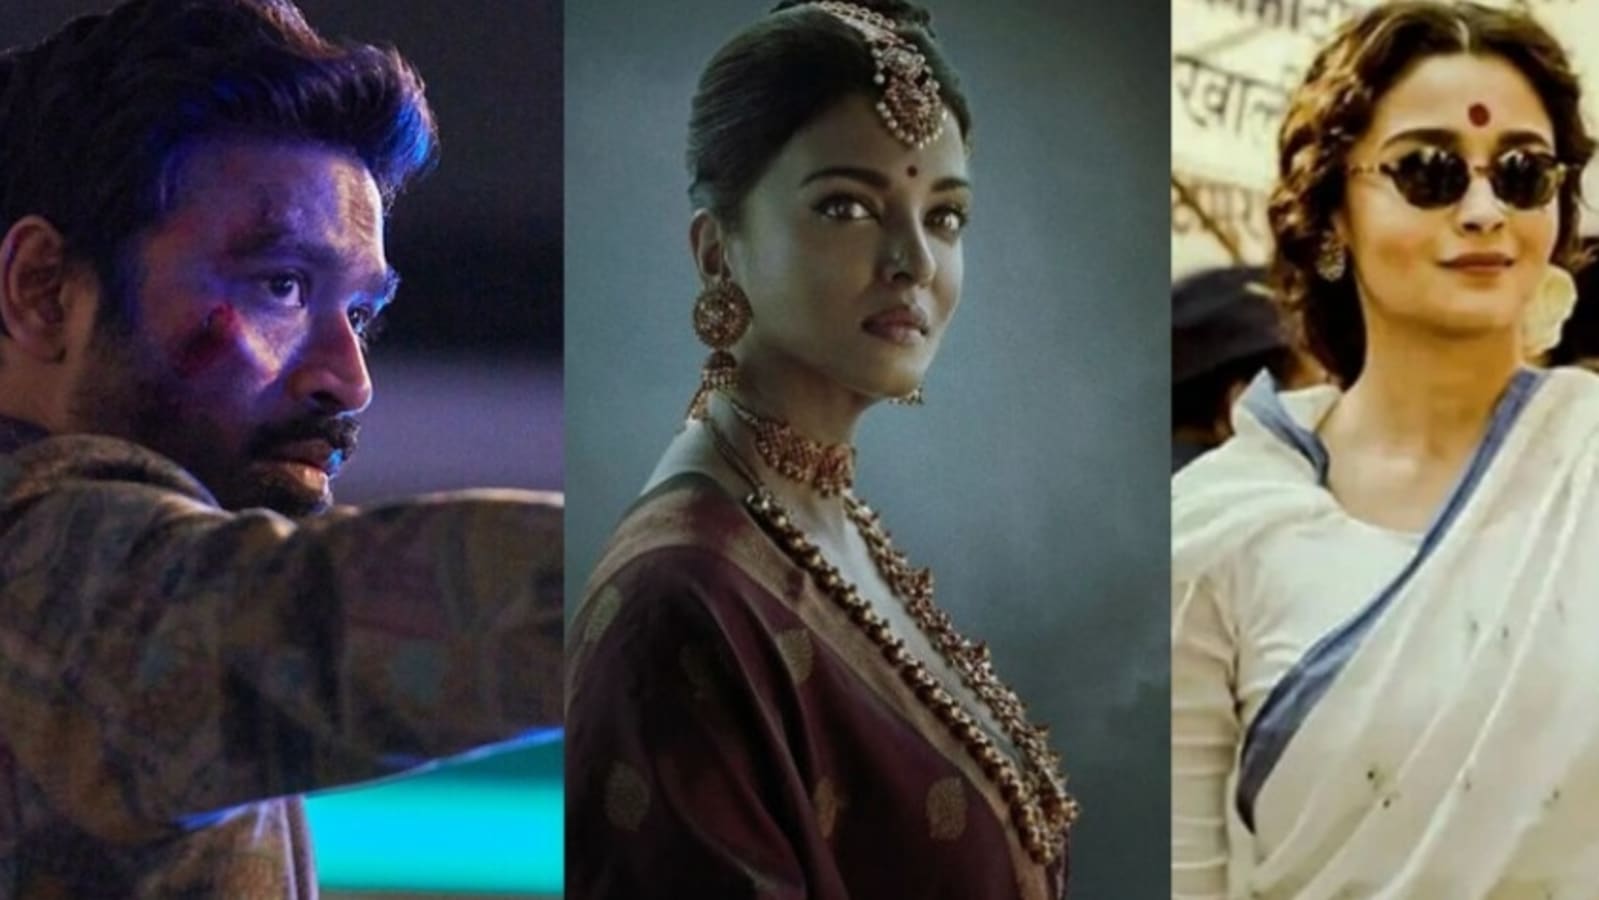 Dhanush Tops IMDB List Of Most Popular Indian Stars, Followed By